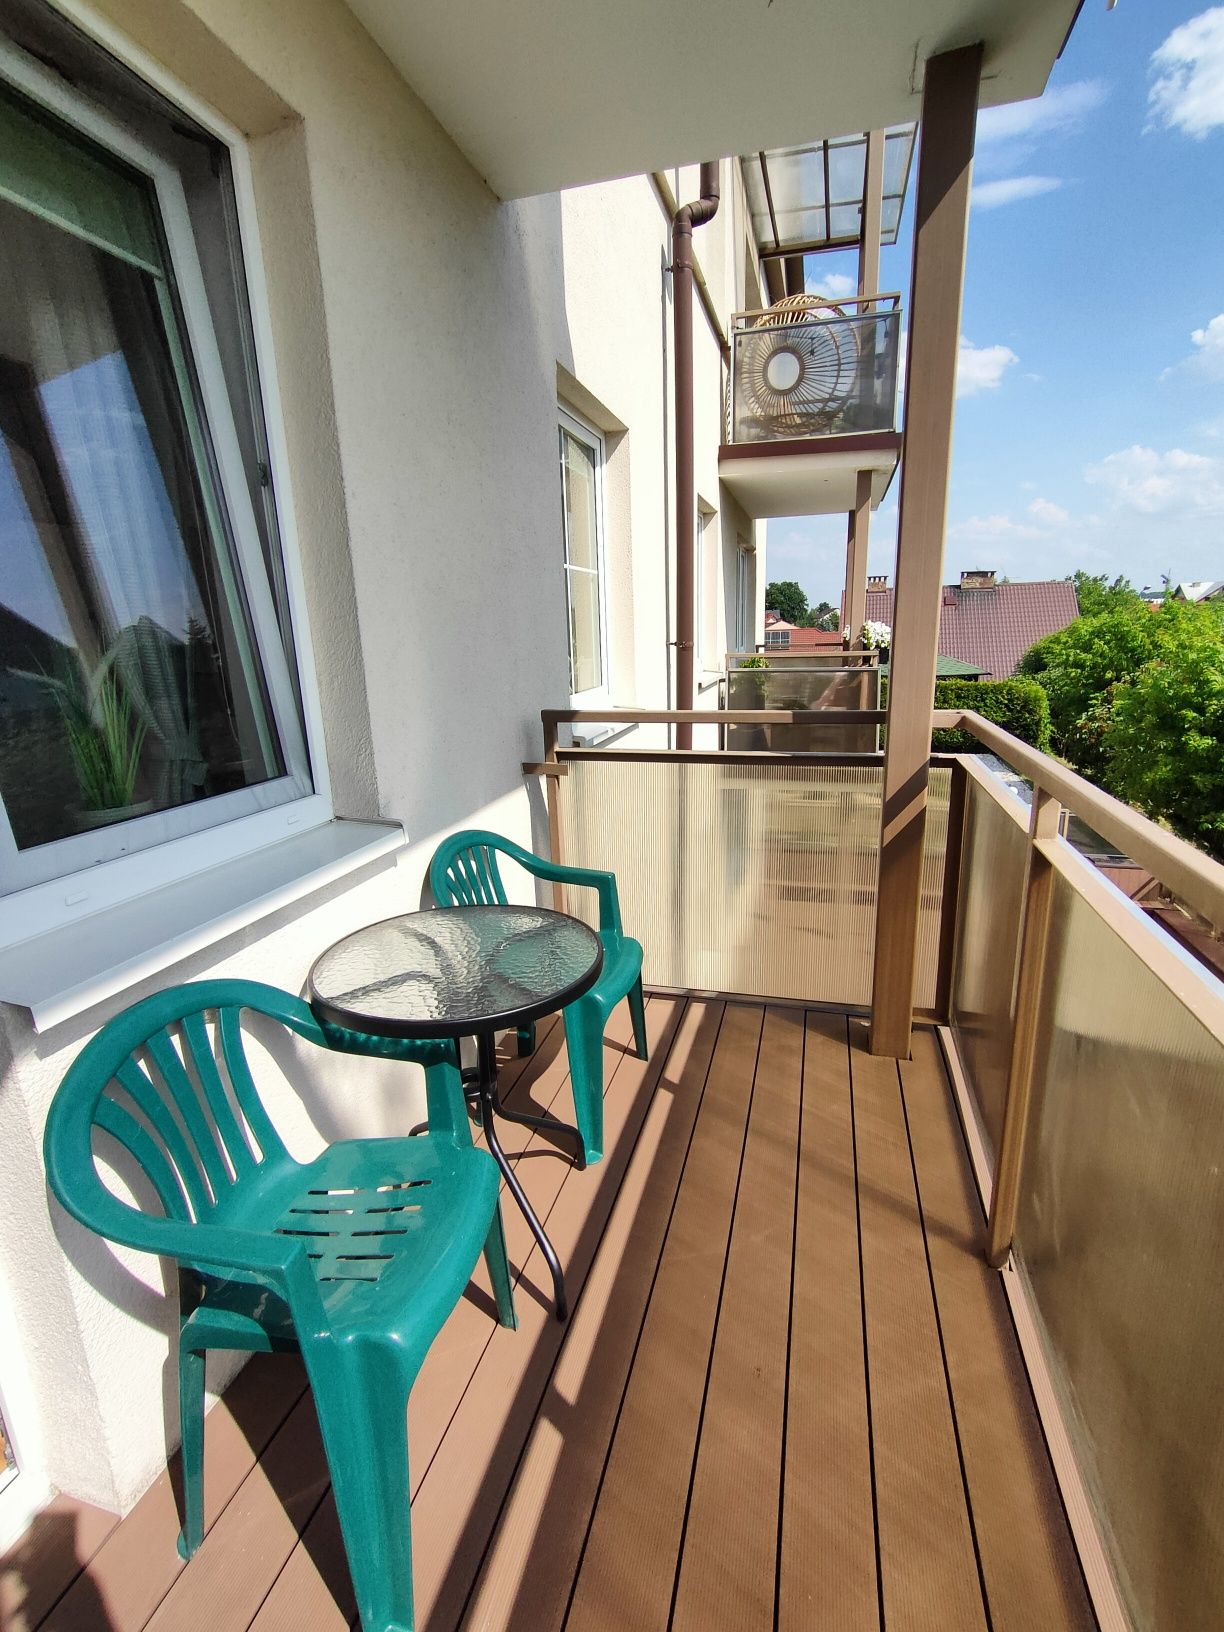 Noclegi w Ciechocinku apartament z balkonem PARKING blisko baseny cent